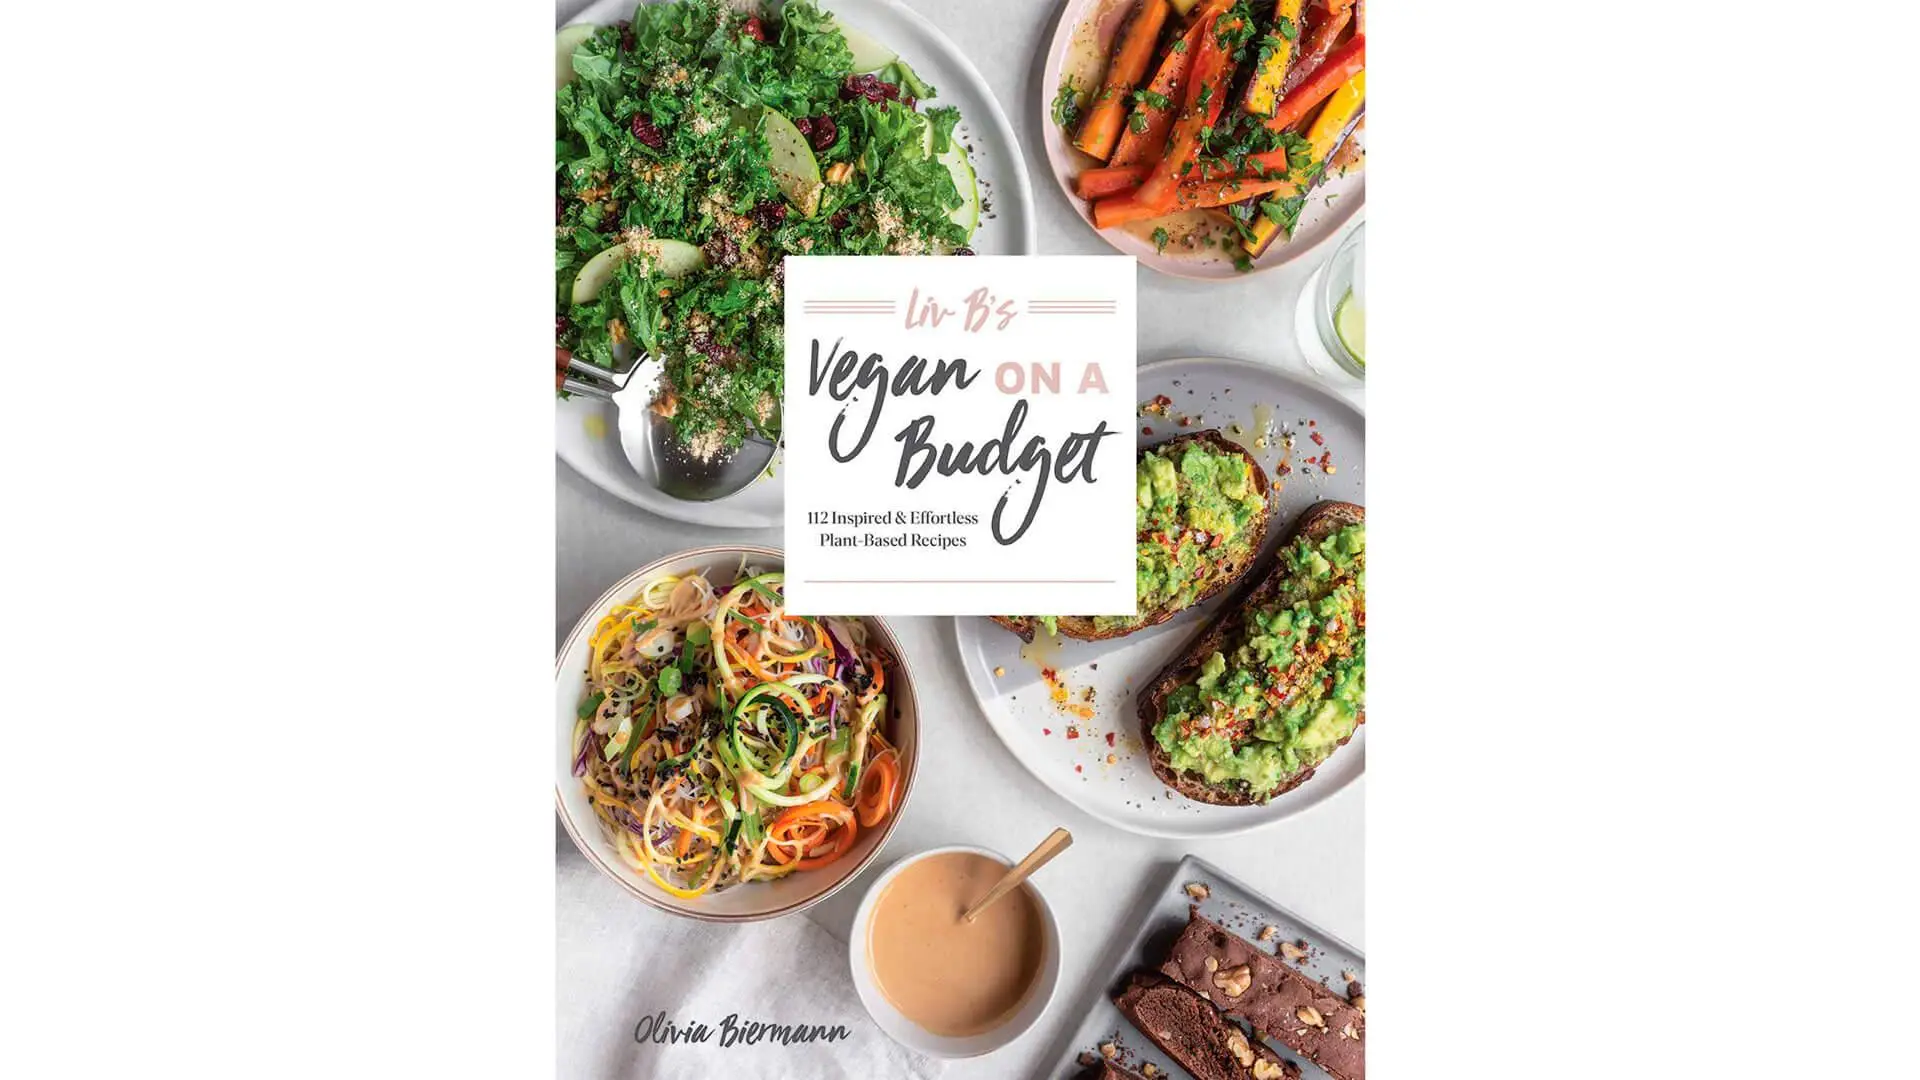 Vegan Cookbook: Liv B's Vegan on a Budget